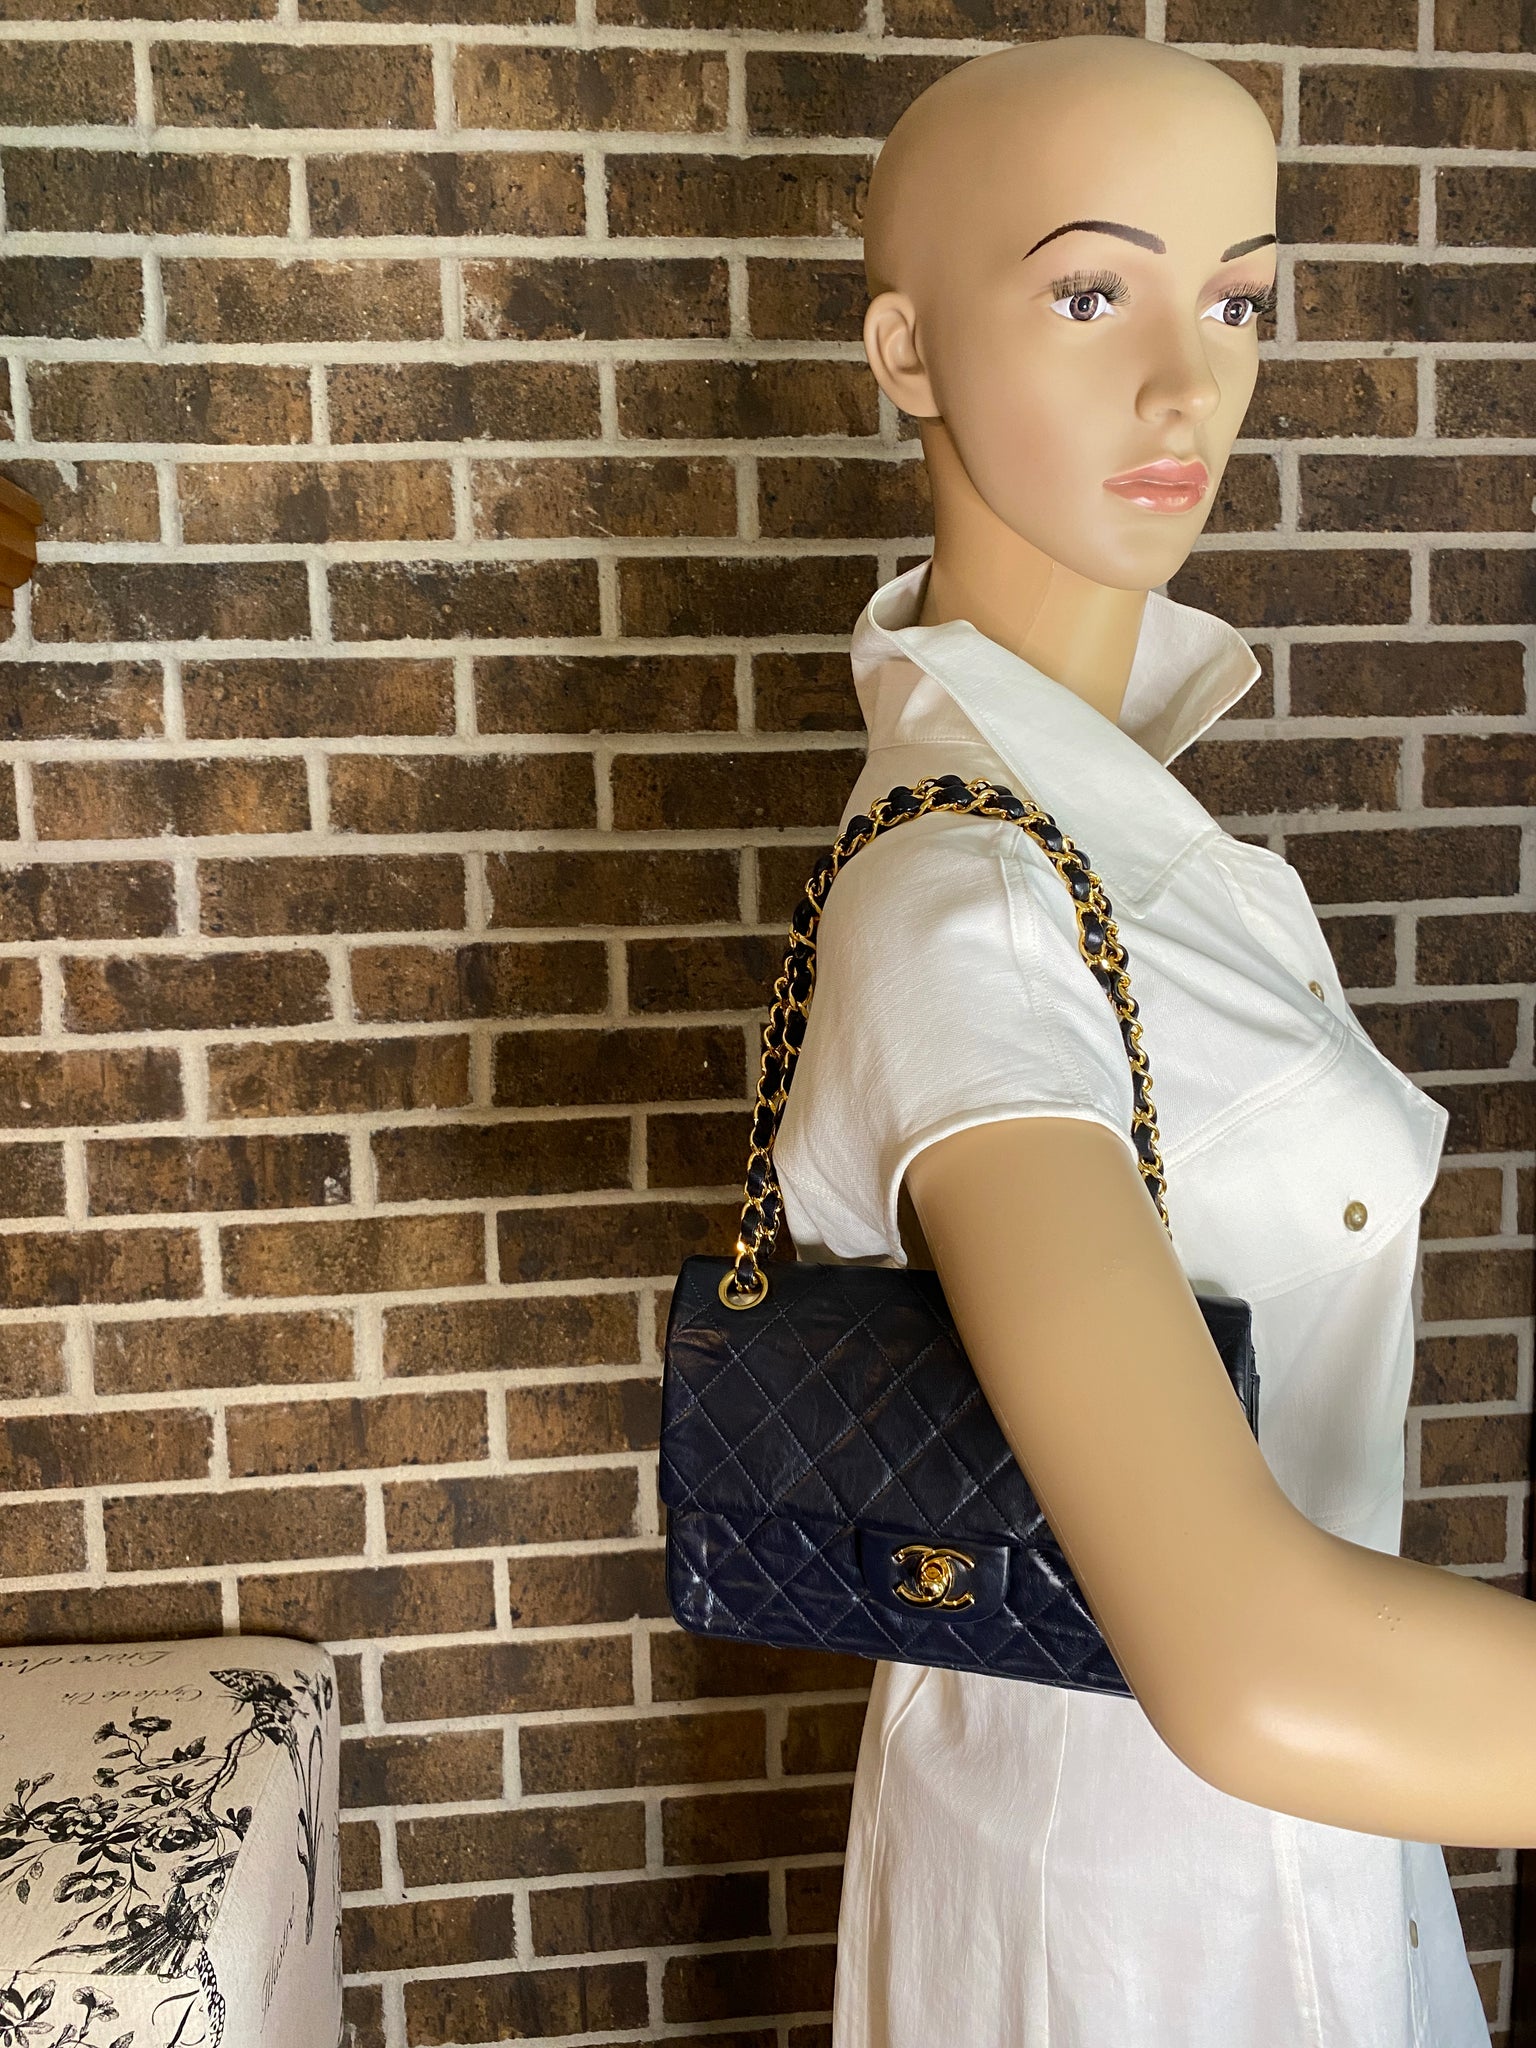 Chanel Timeless/Classic Double Flap Shoulder Bag